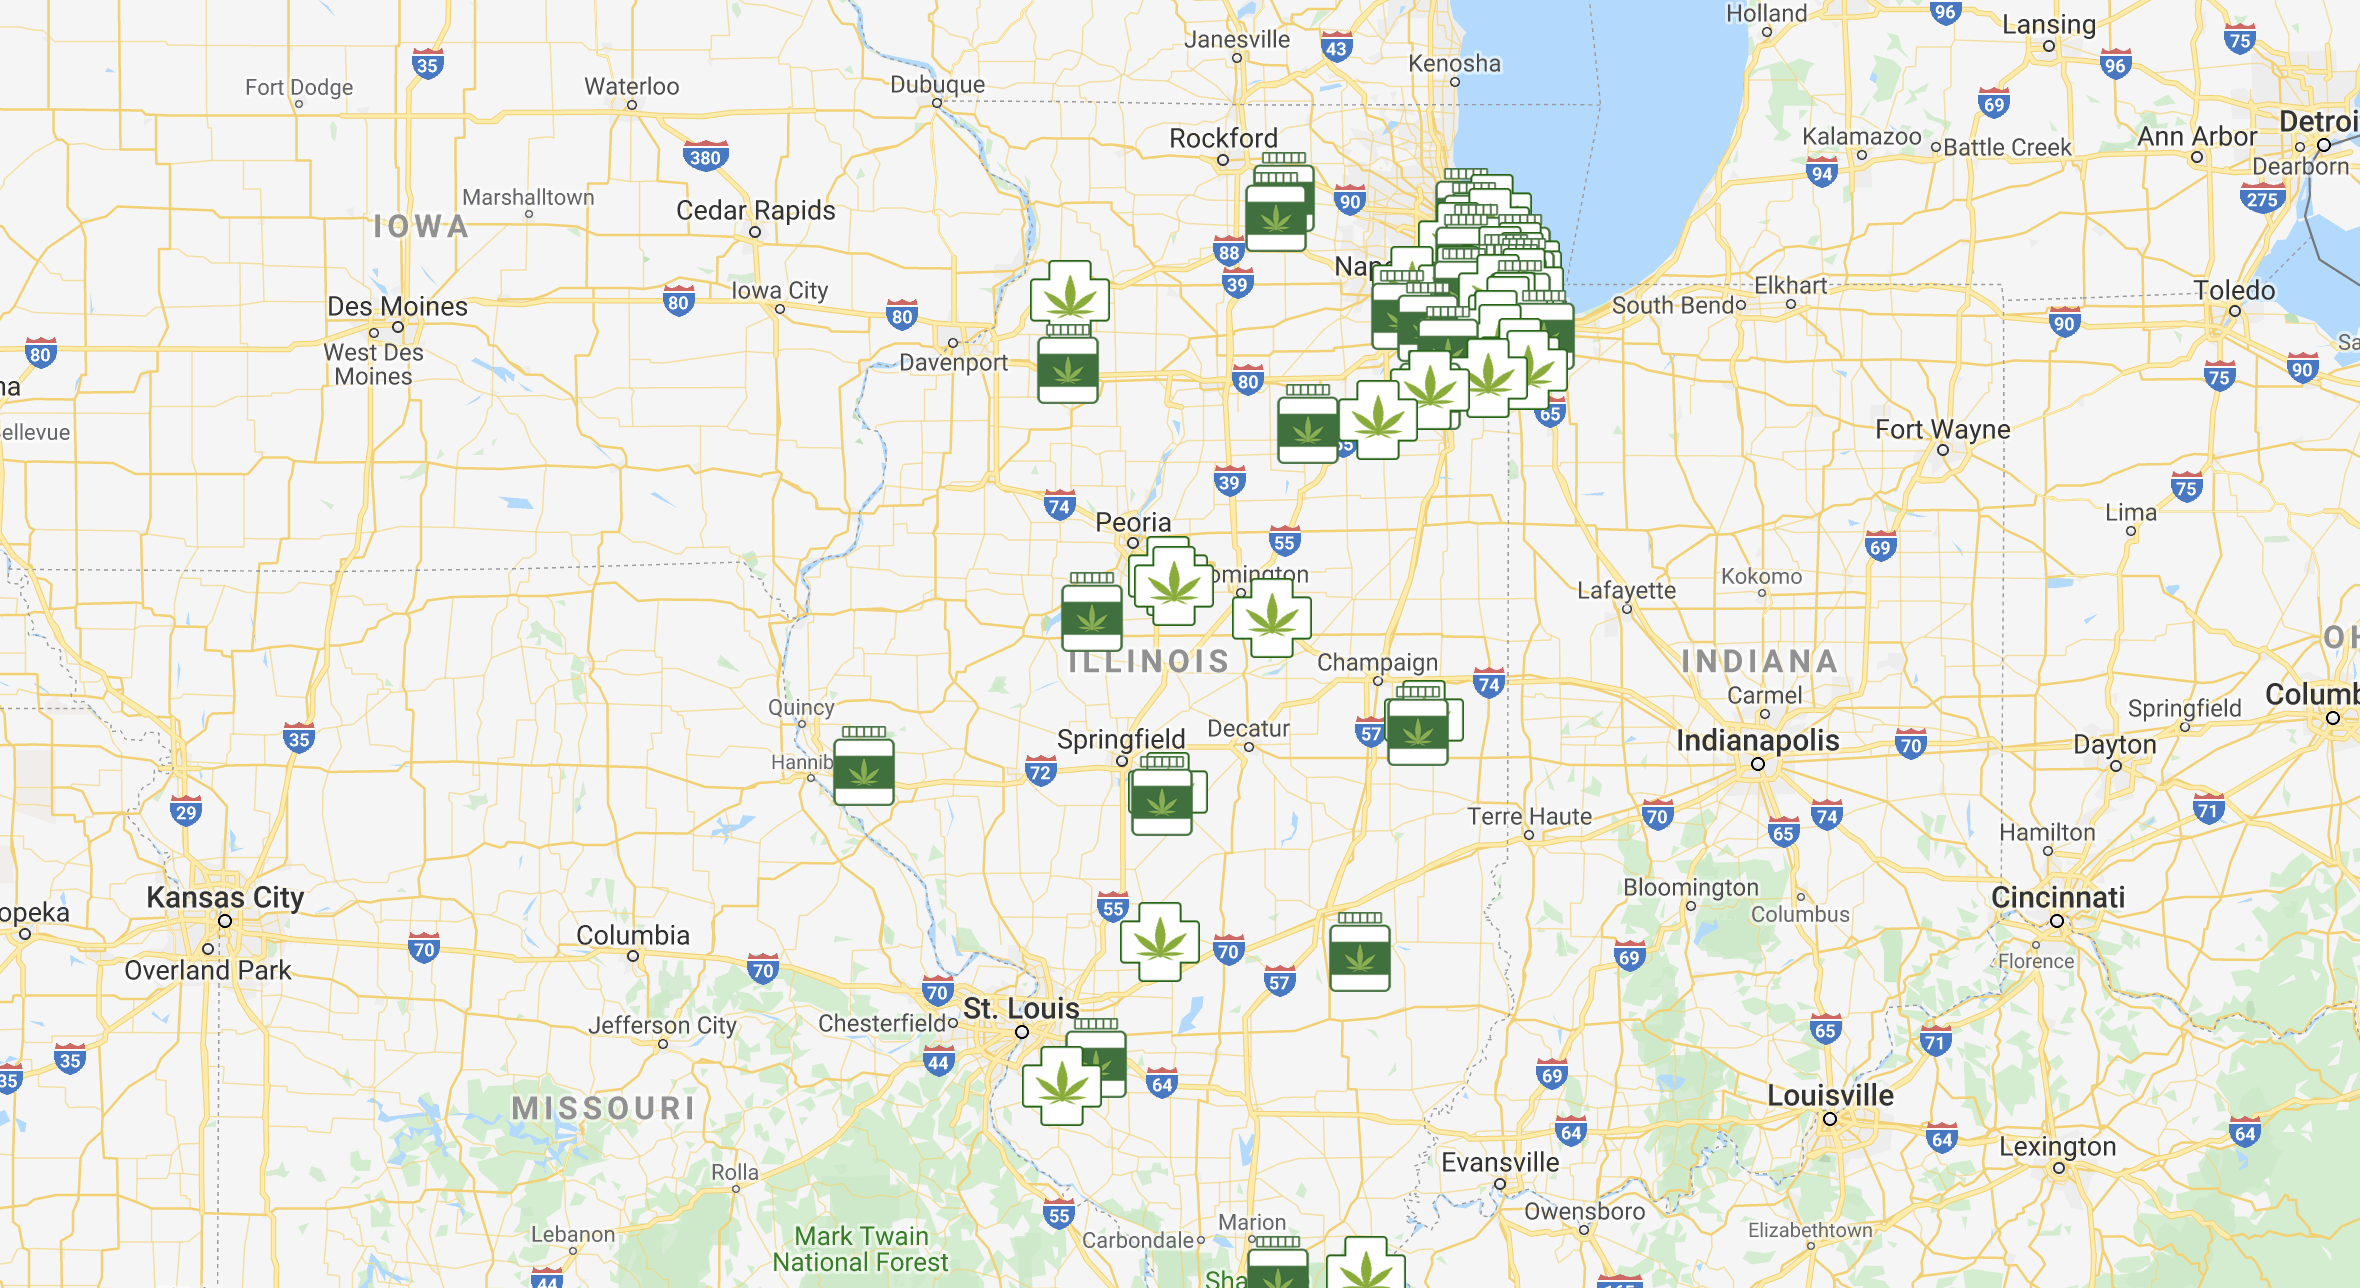 Map of Marijuana Dispensaries in Illinois Chicago News WTTW